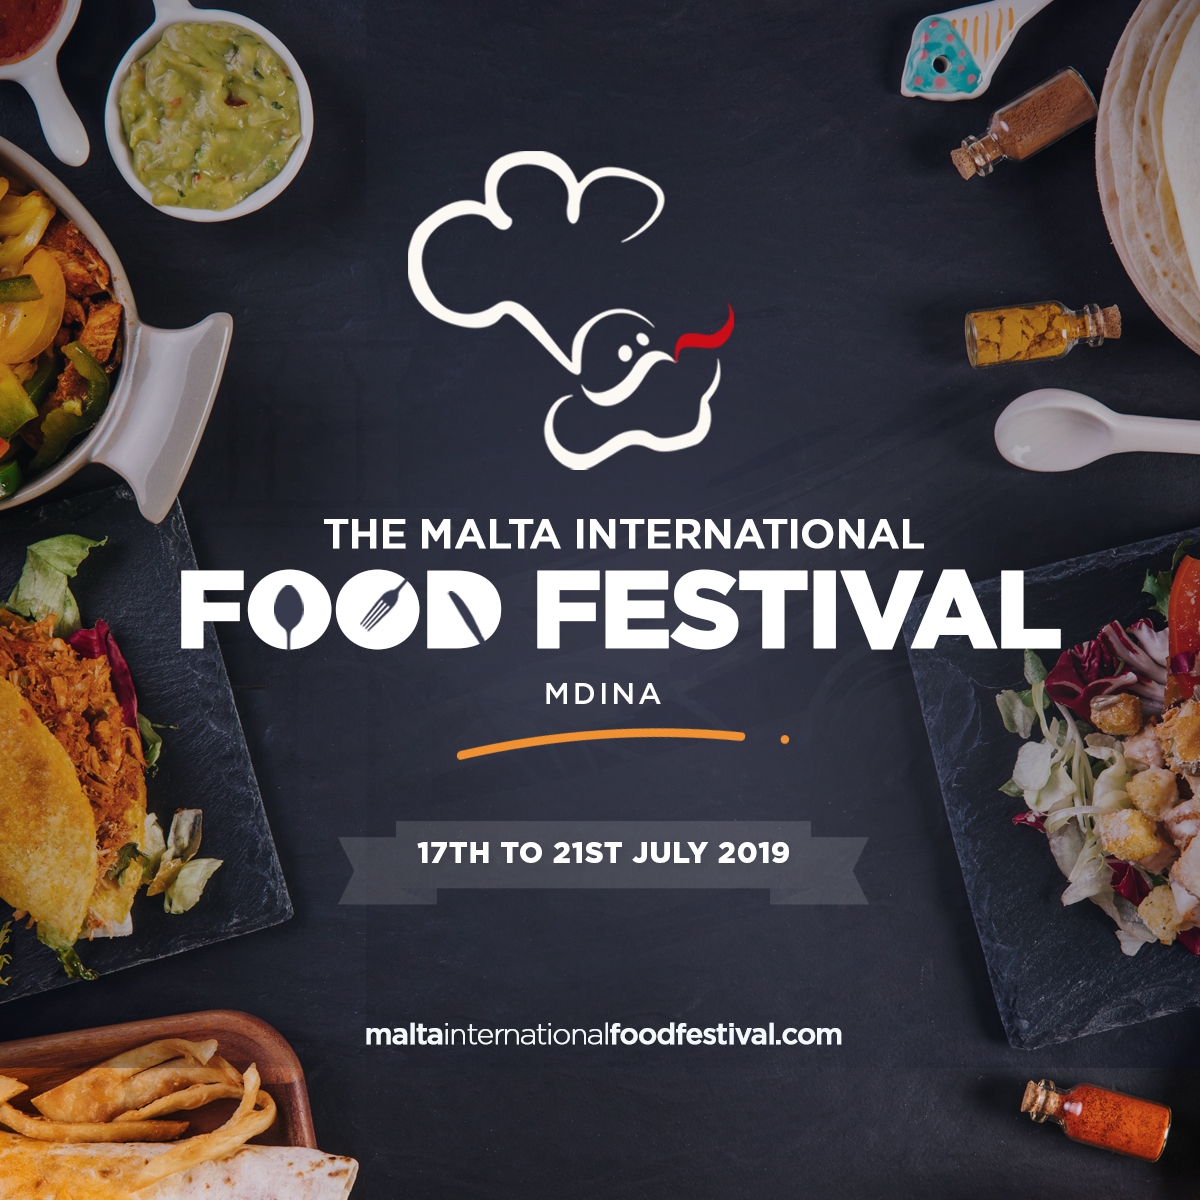 The Malta International Food Festival